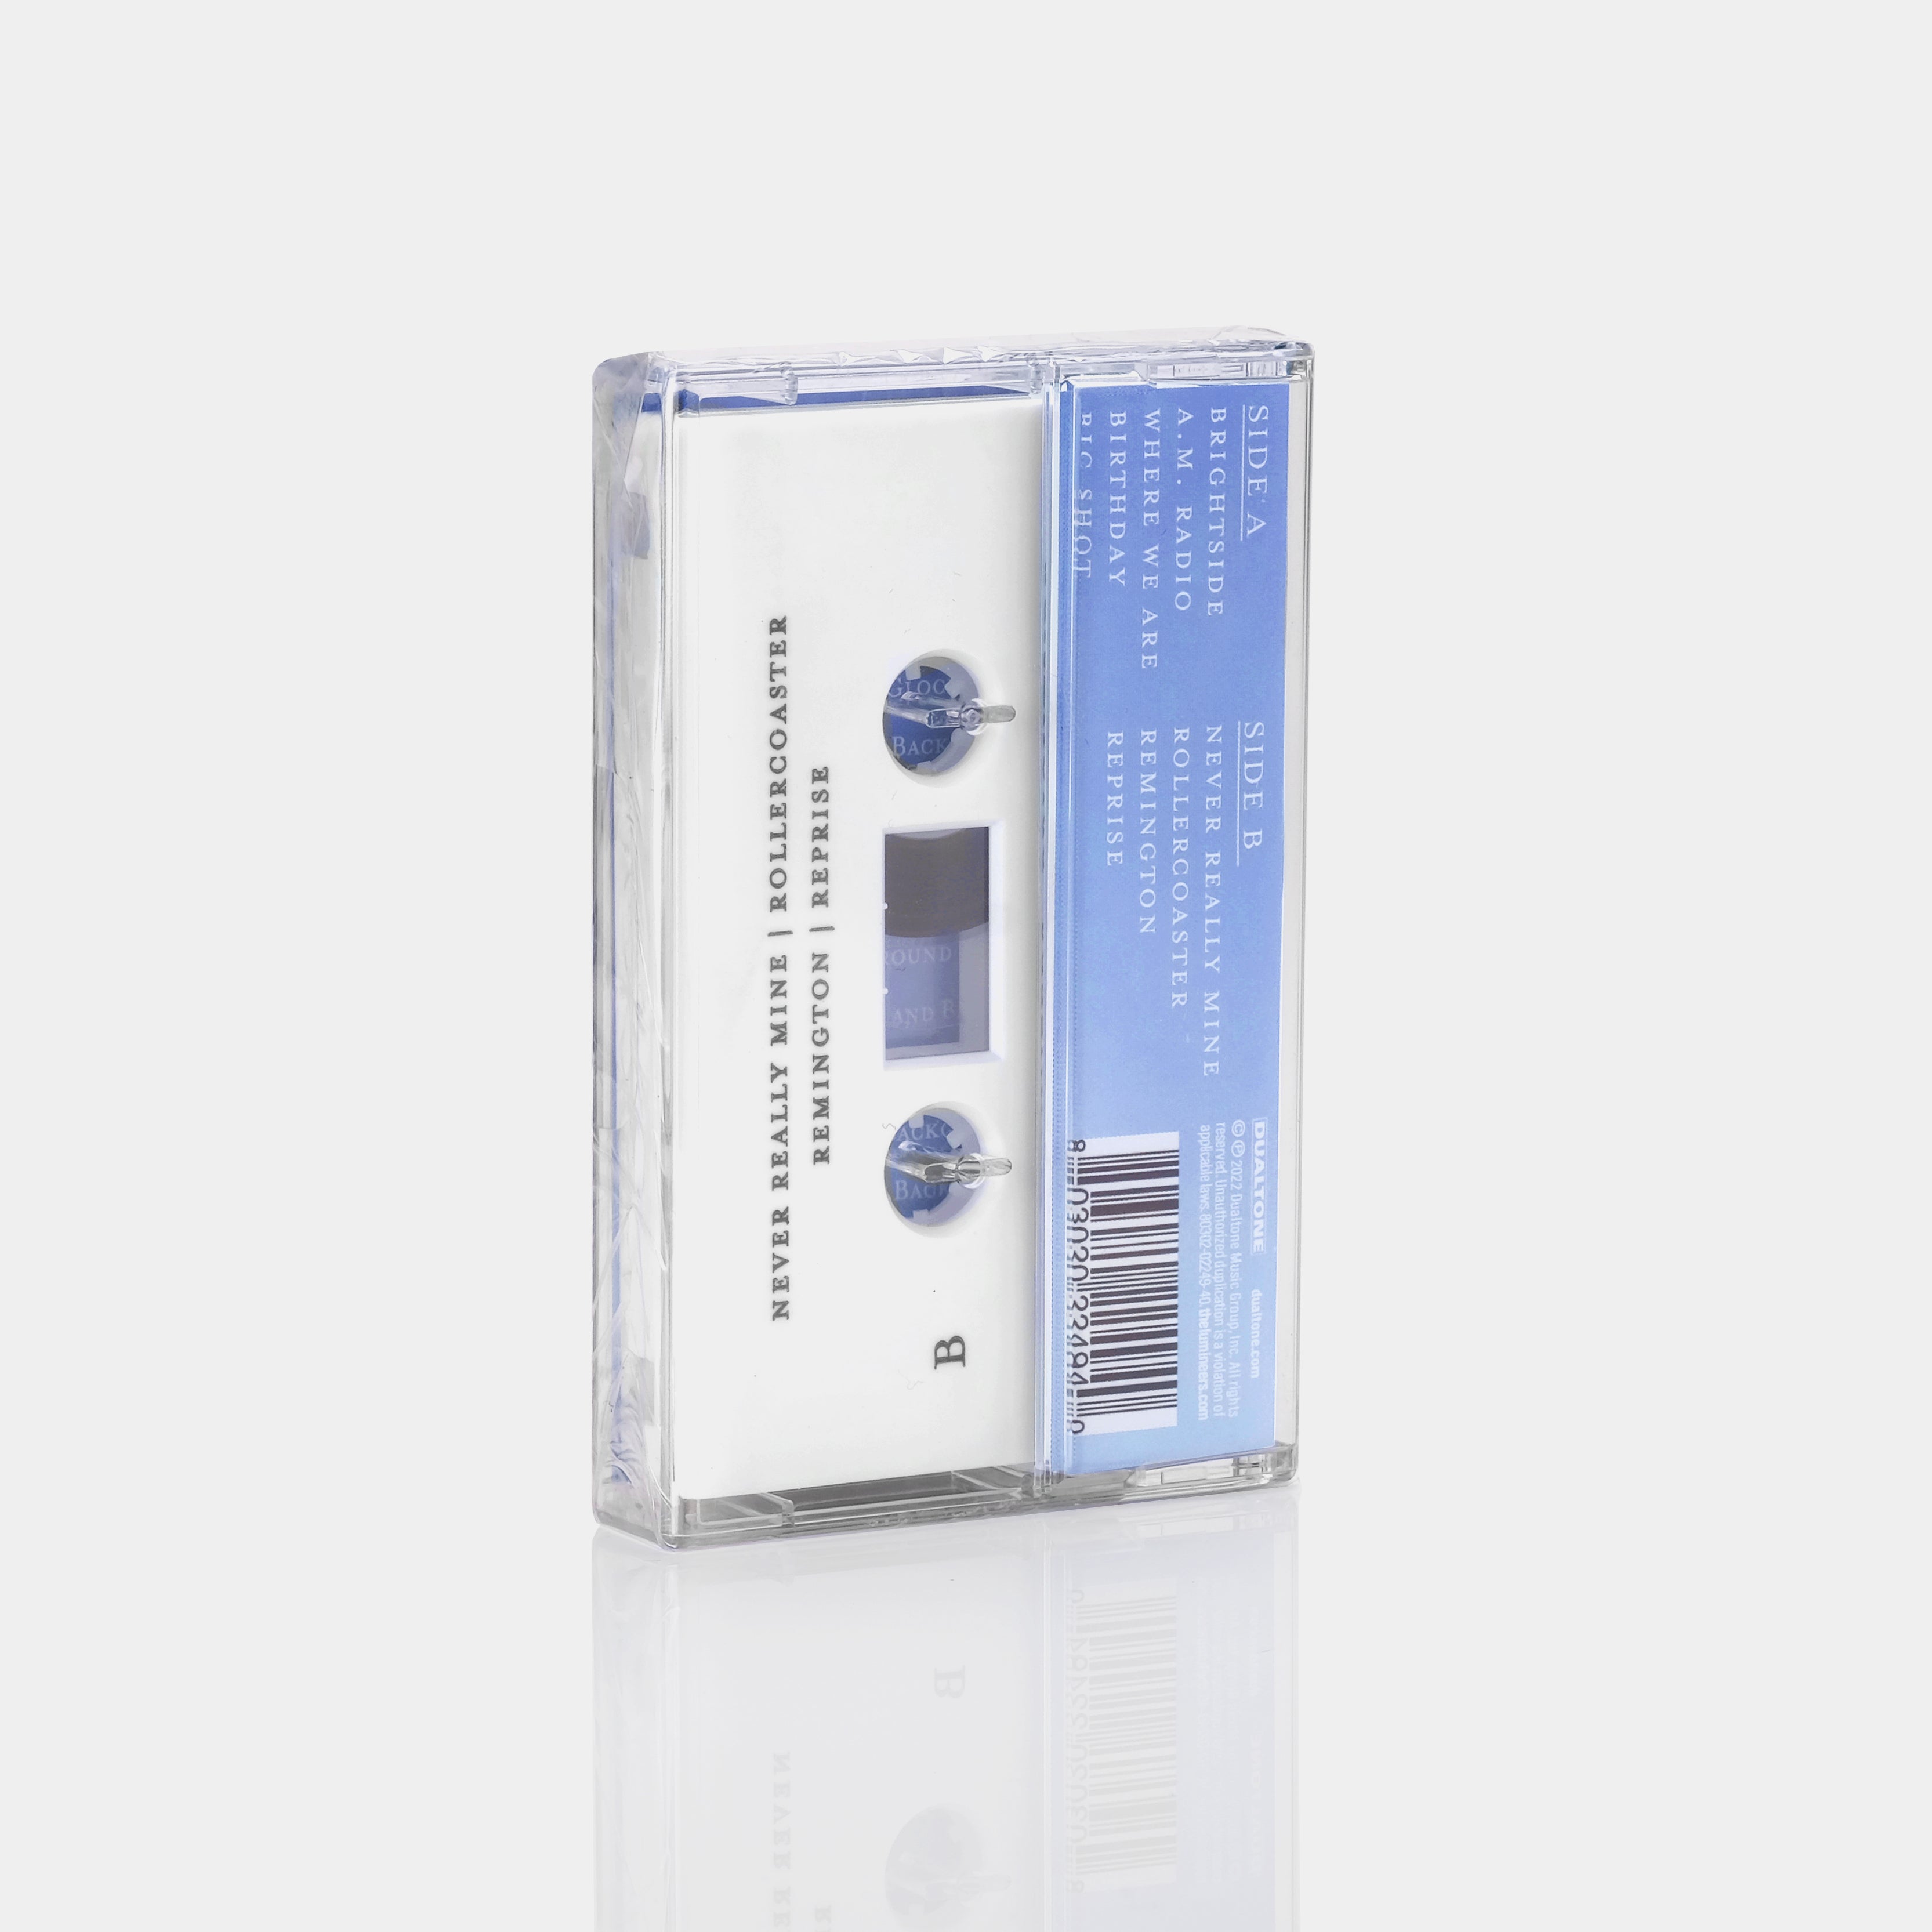 The Lumineers - BRIGHTSIDE Cassette Tape